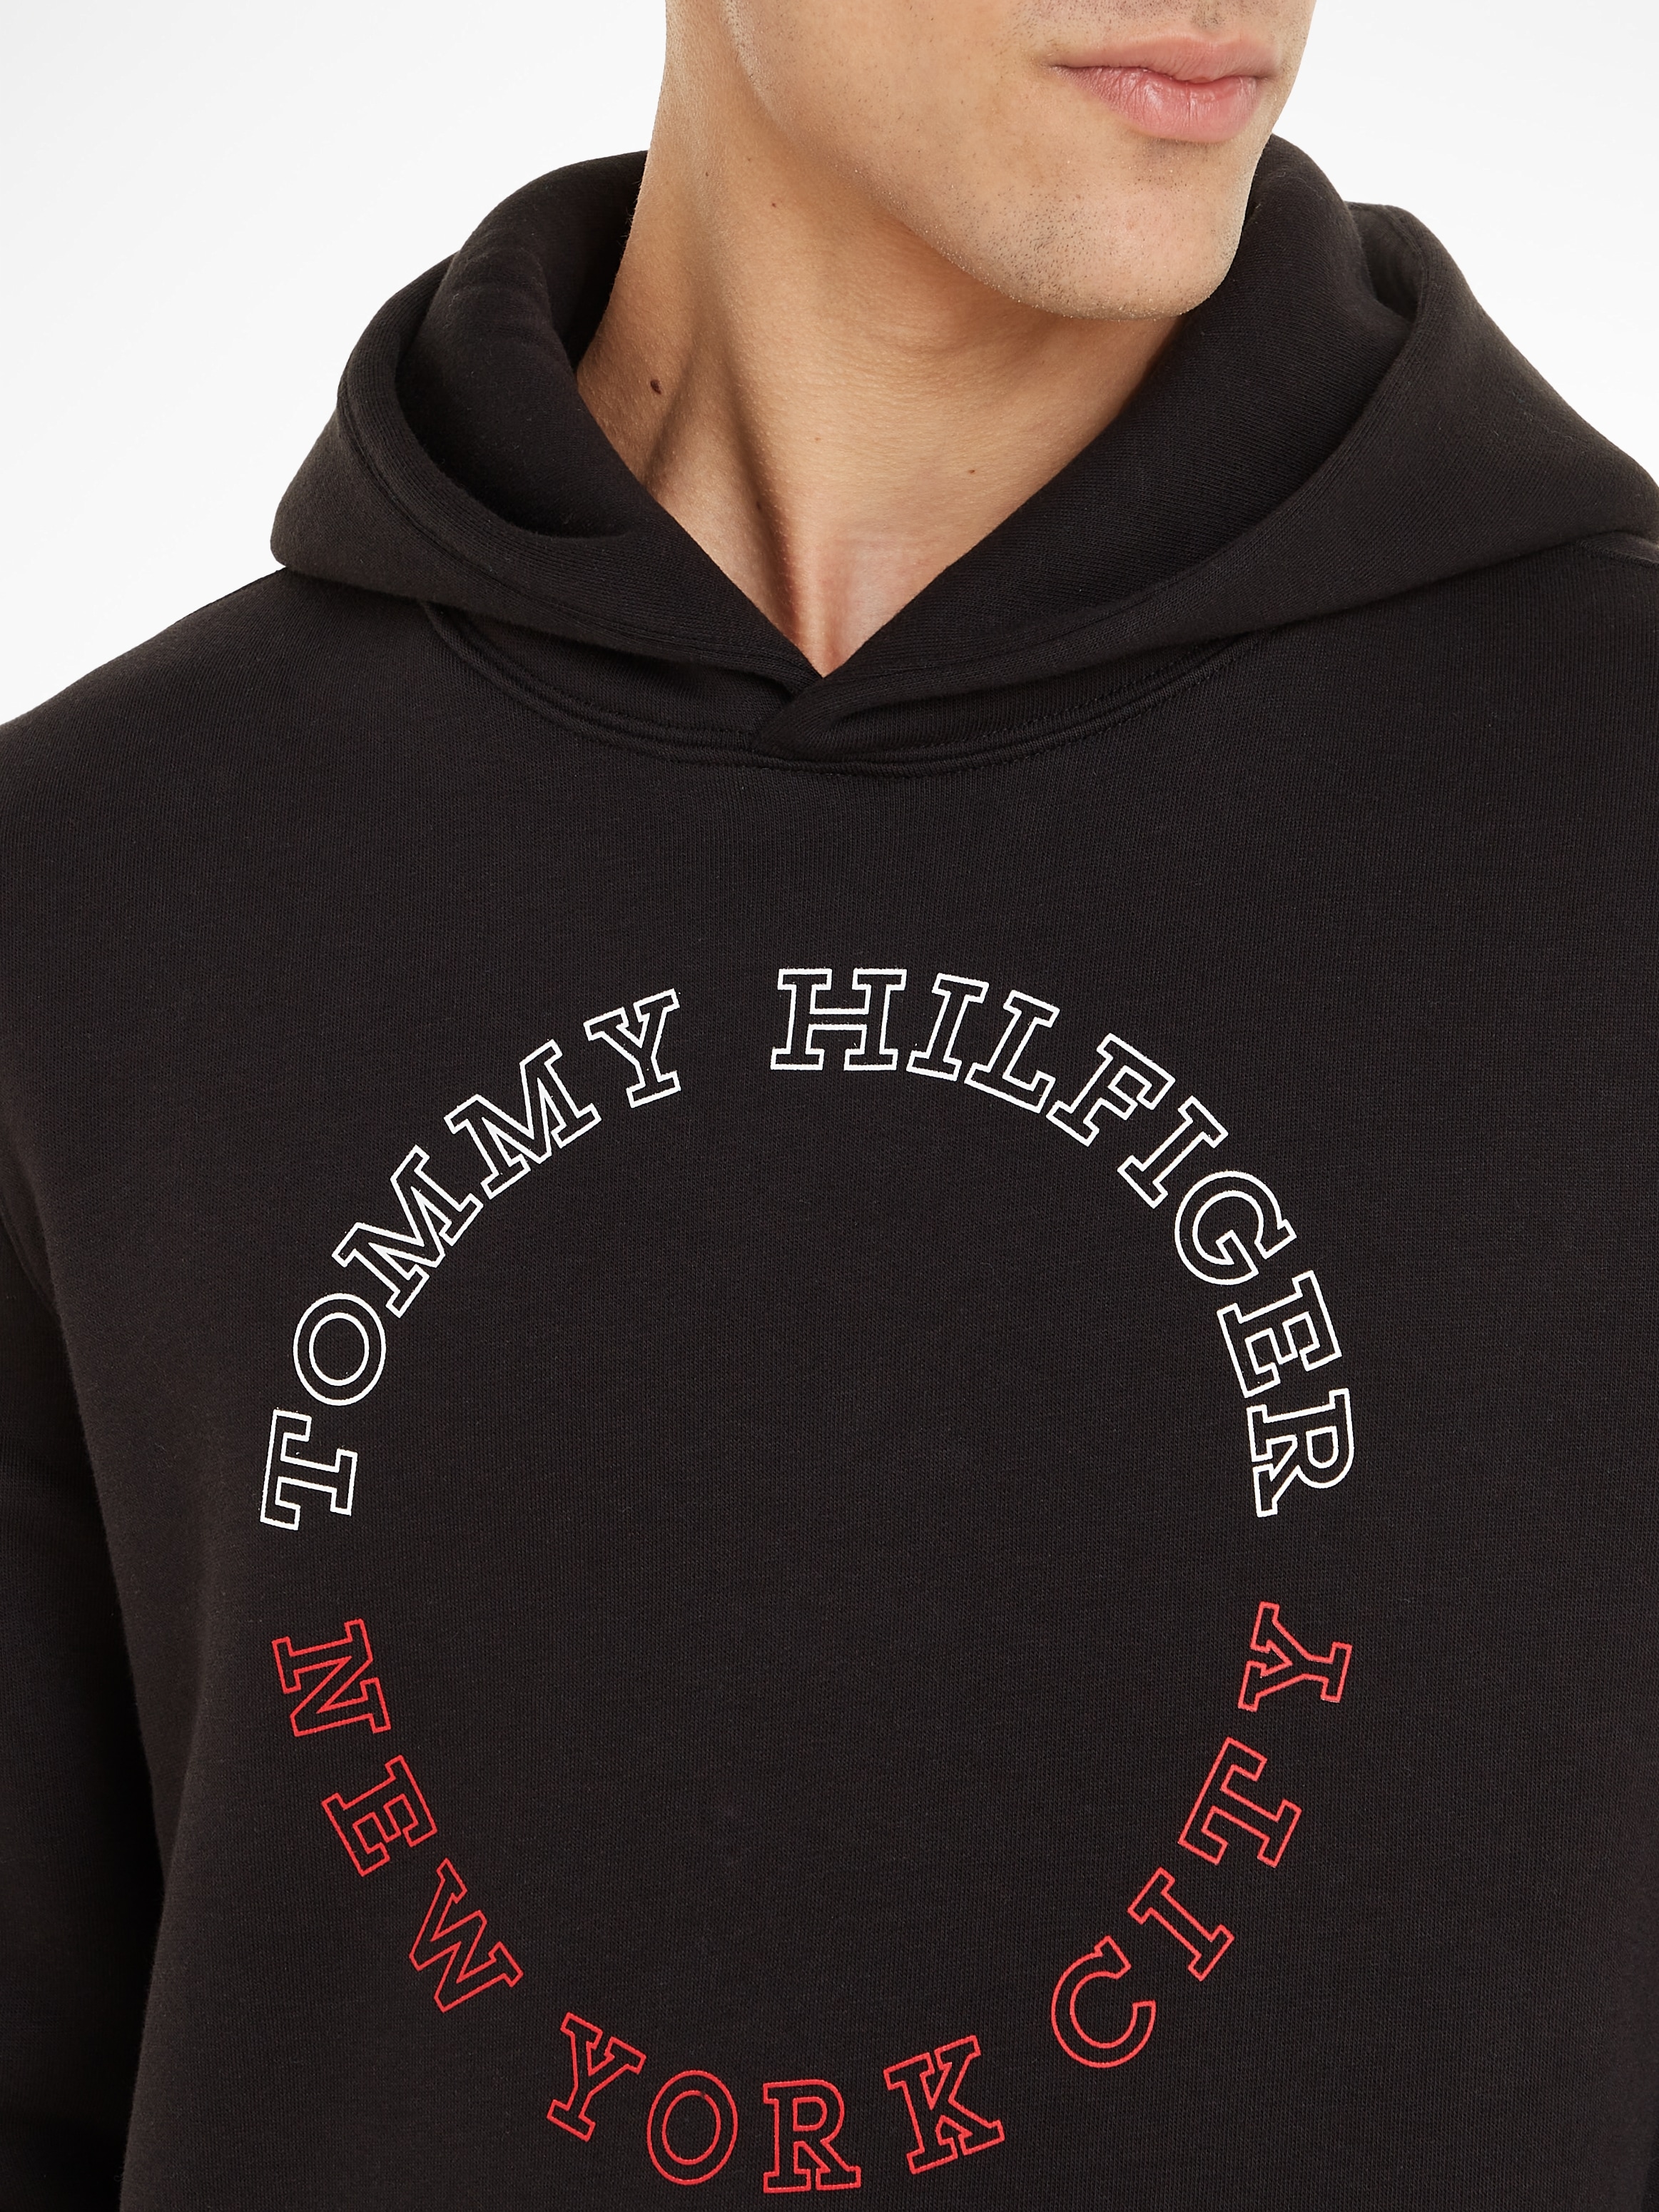 »MONOTYPE Hilfiger ♕ HOODY« bei Tommy ROUNDALL Kapuzensweatshirt